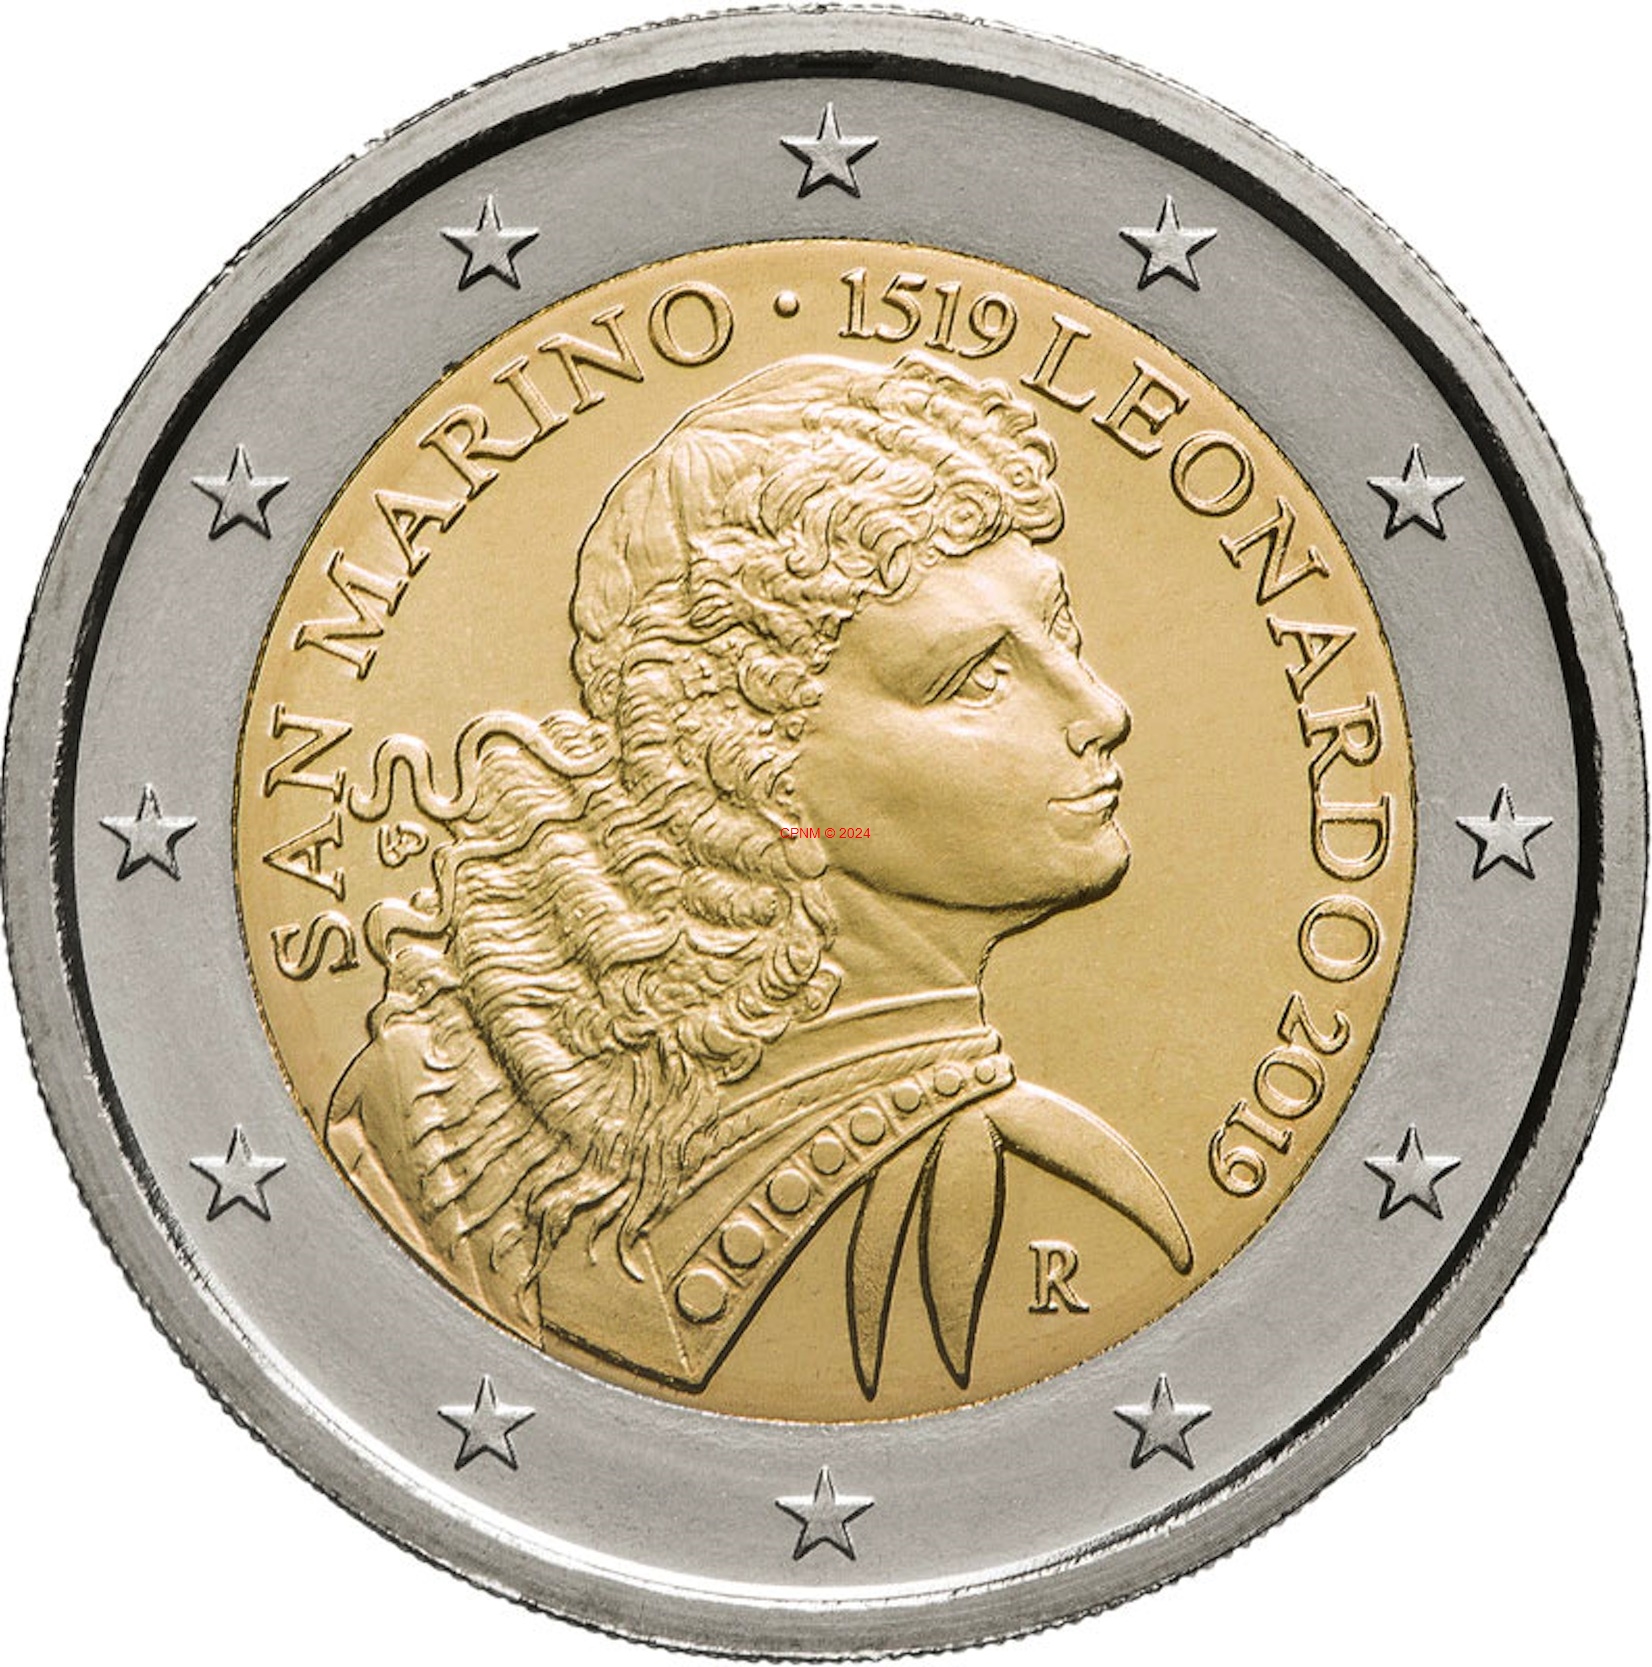 Евро сан марино. Монеты 2 евро Сан Марино. Монета 2 евро Леонардо Сан Марино. 2 Евро Сан Марино 2019. Монета 2 евро Сан Марино 2019.